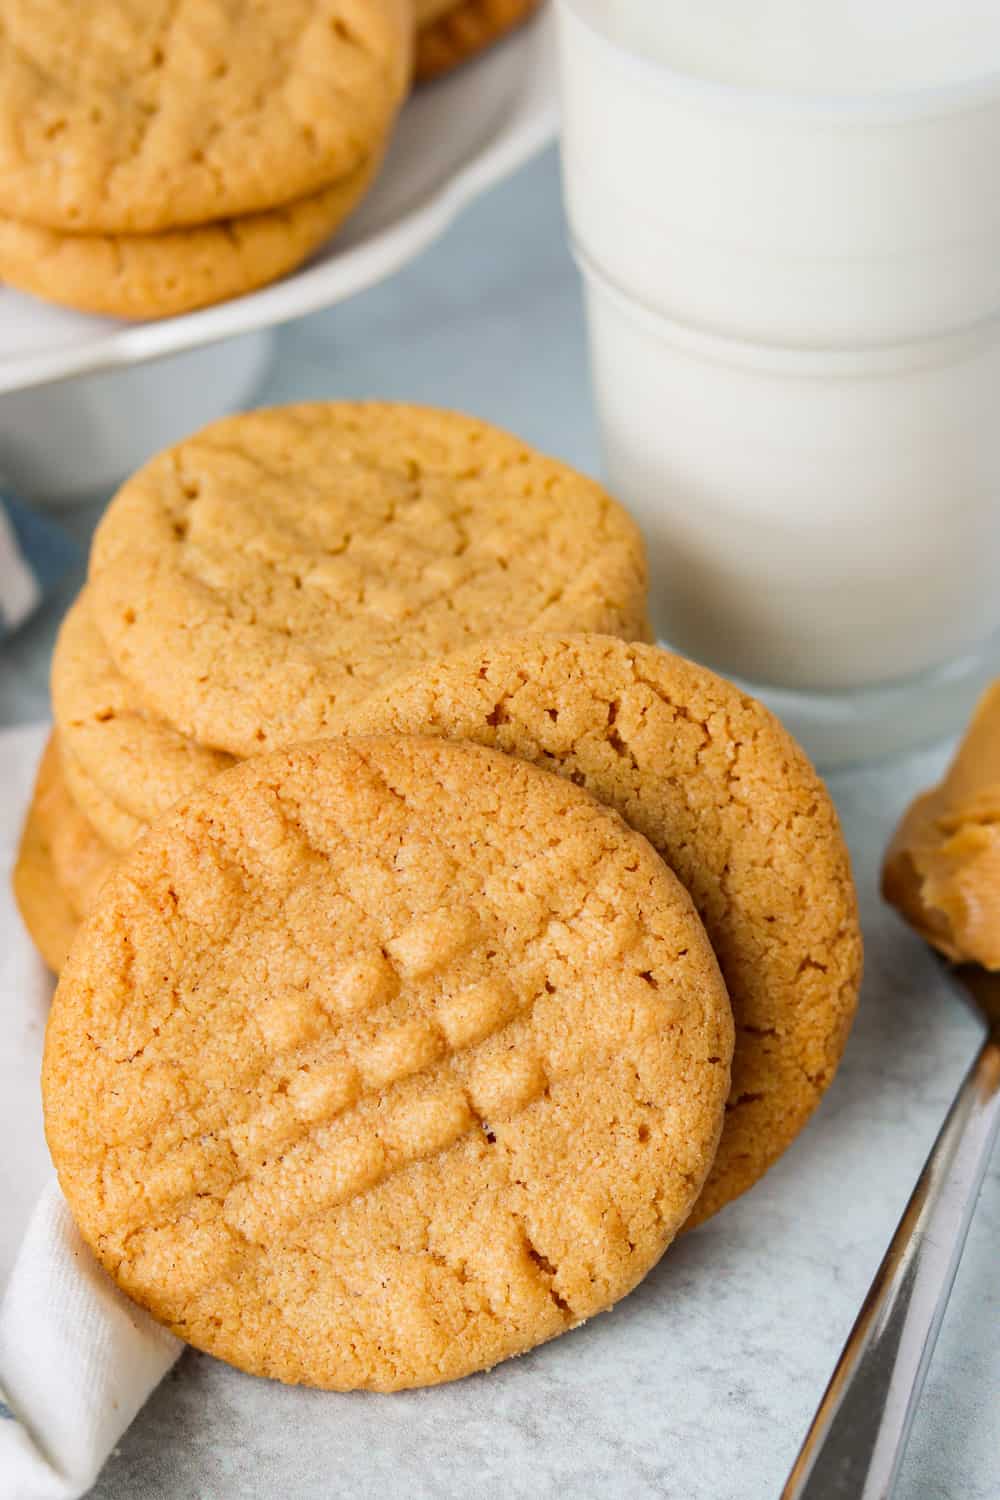 https://www.365daysofbakingandmore.com/wp-content/uploads/2014/04/3-Ingredient-13-Minute-Peanut-Butter-Cookies-PIN.jpg